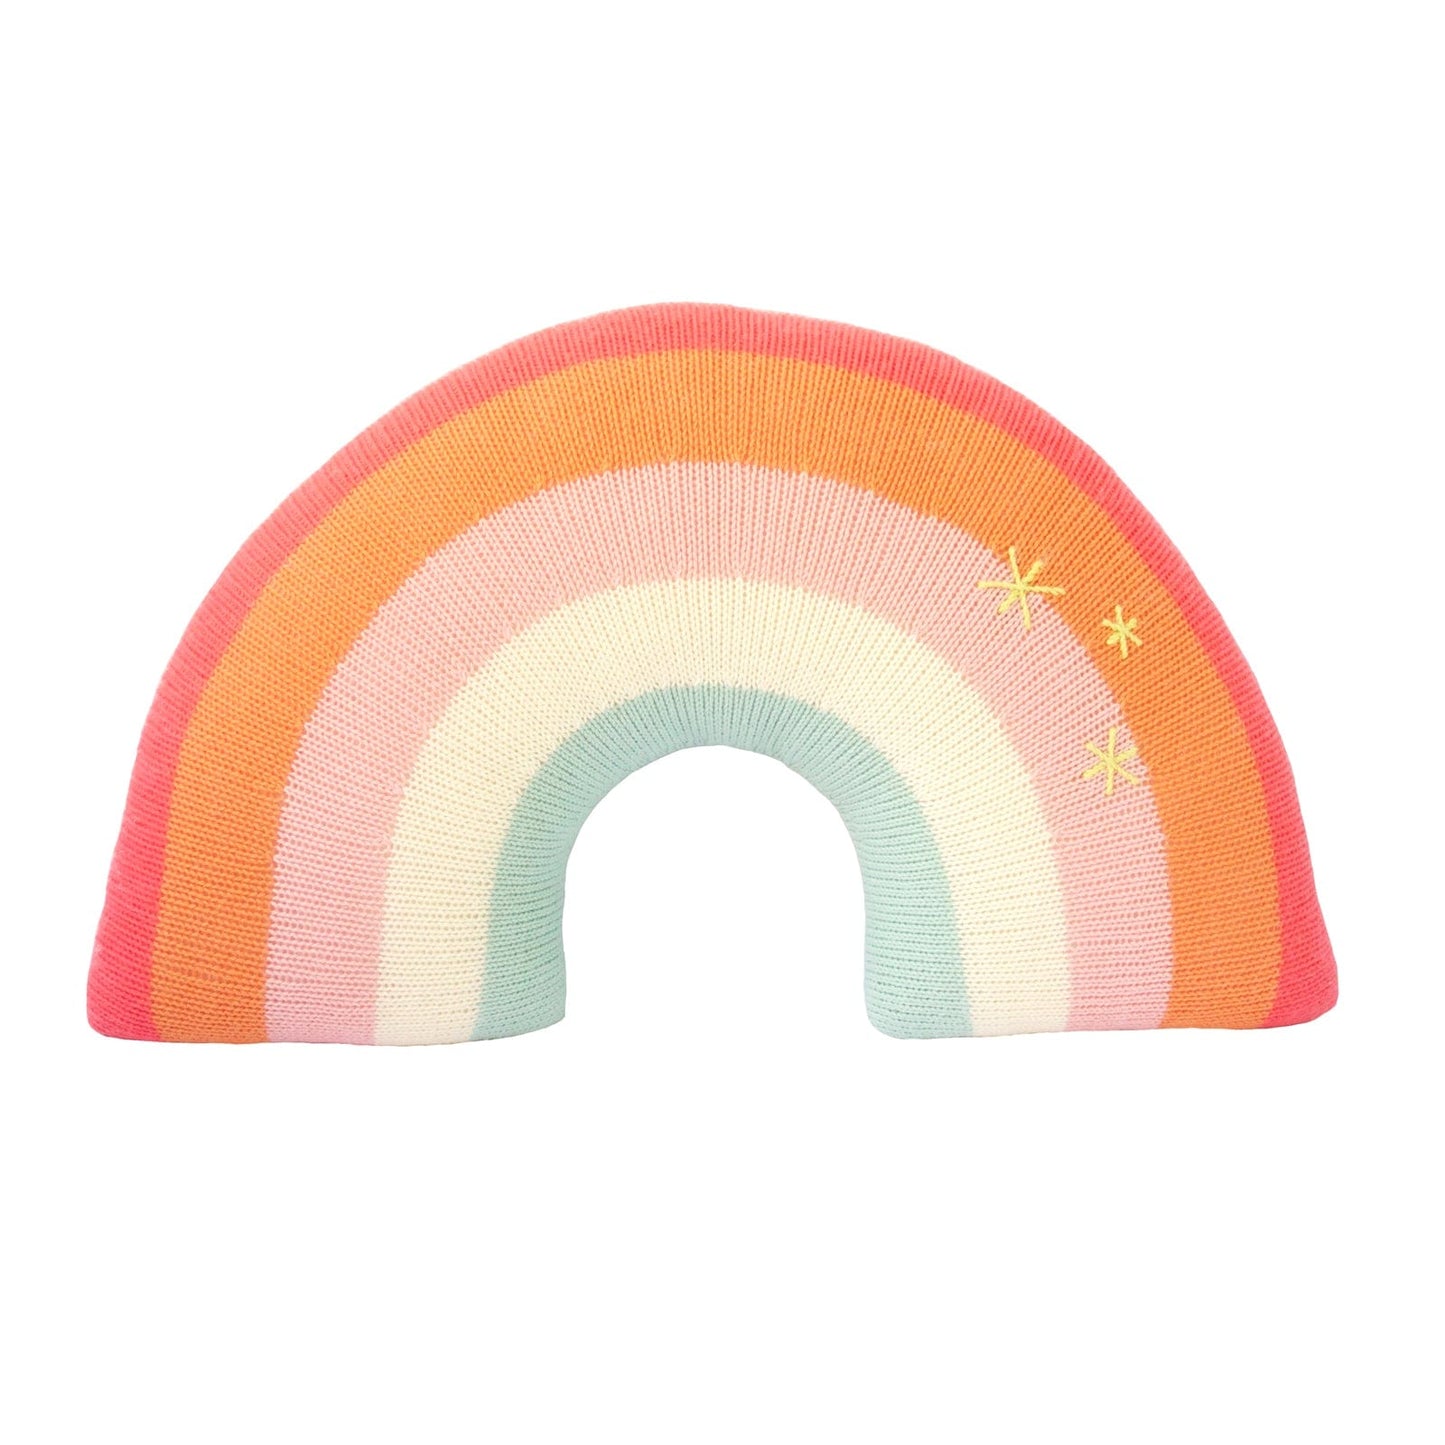 Blabla Rainbow Pillow - Pink